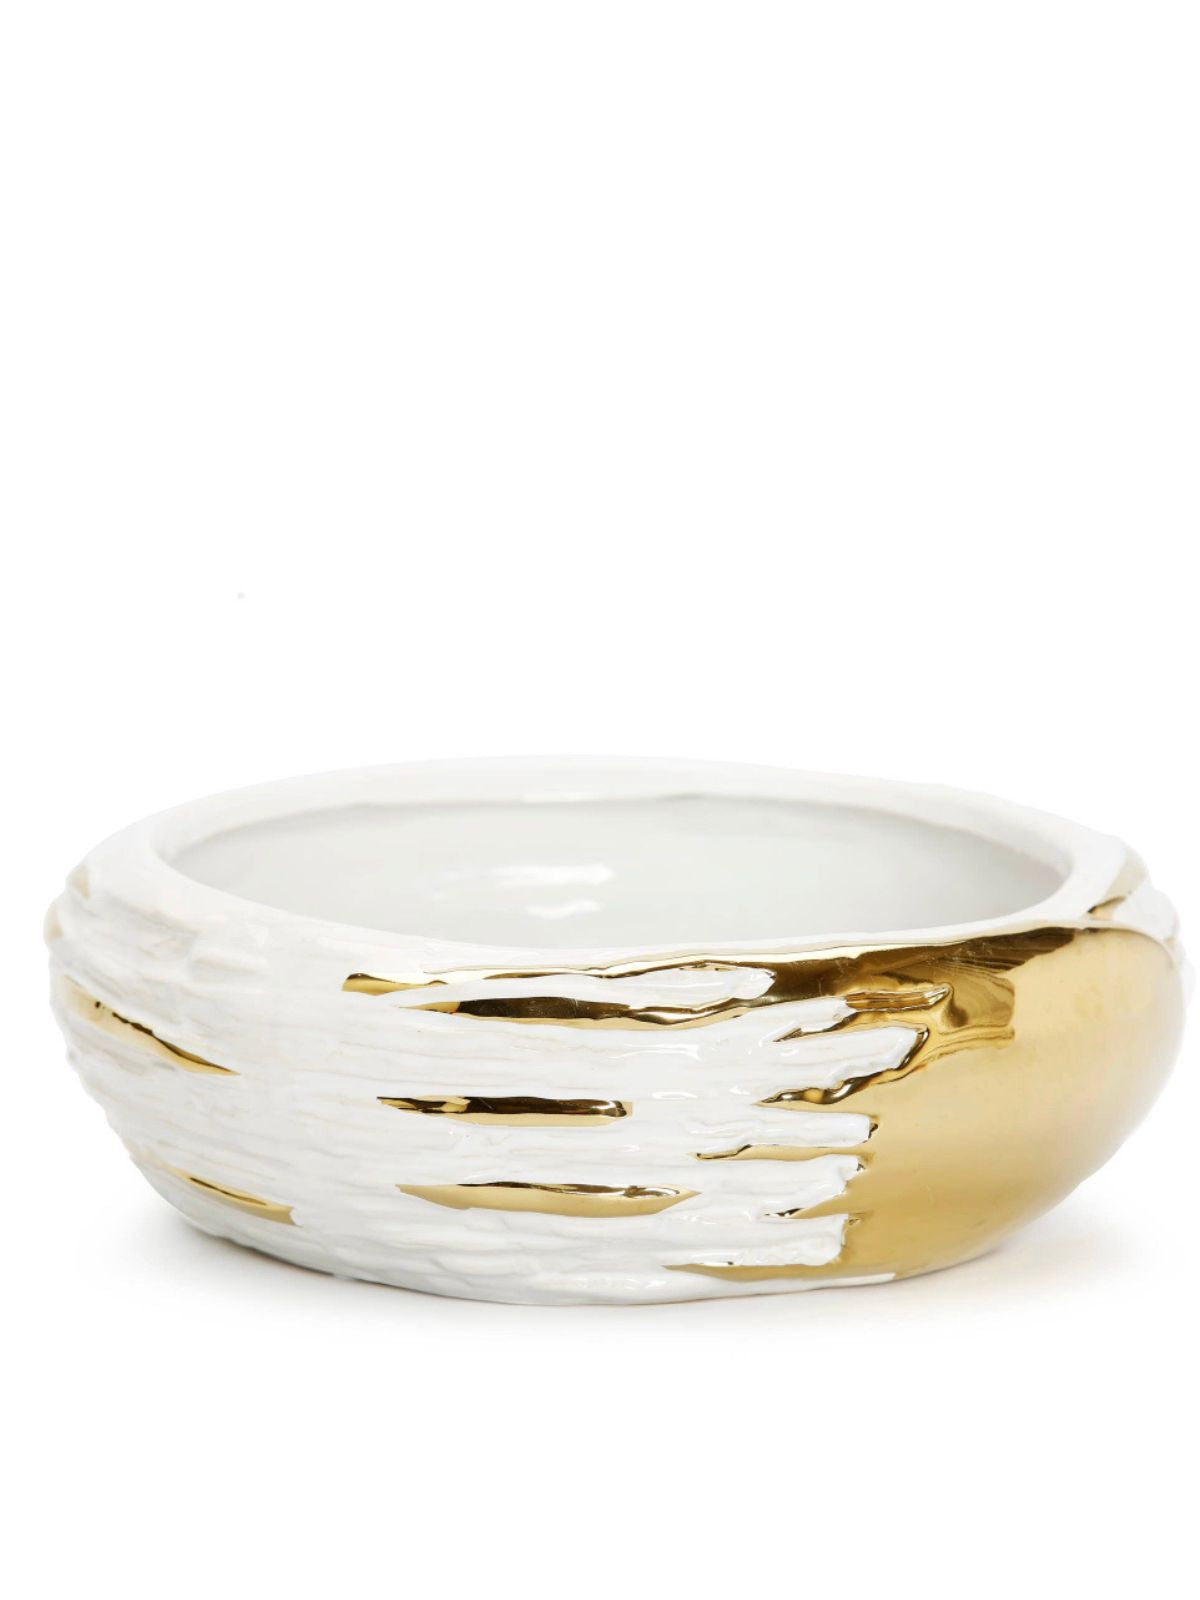 11 inch White Ceramic Bowl With Stunning Gold Textured Brush Design - KYA Home Decor